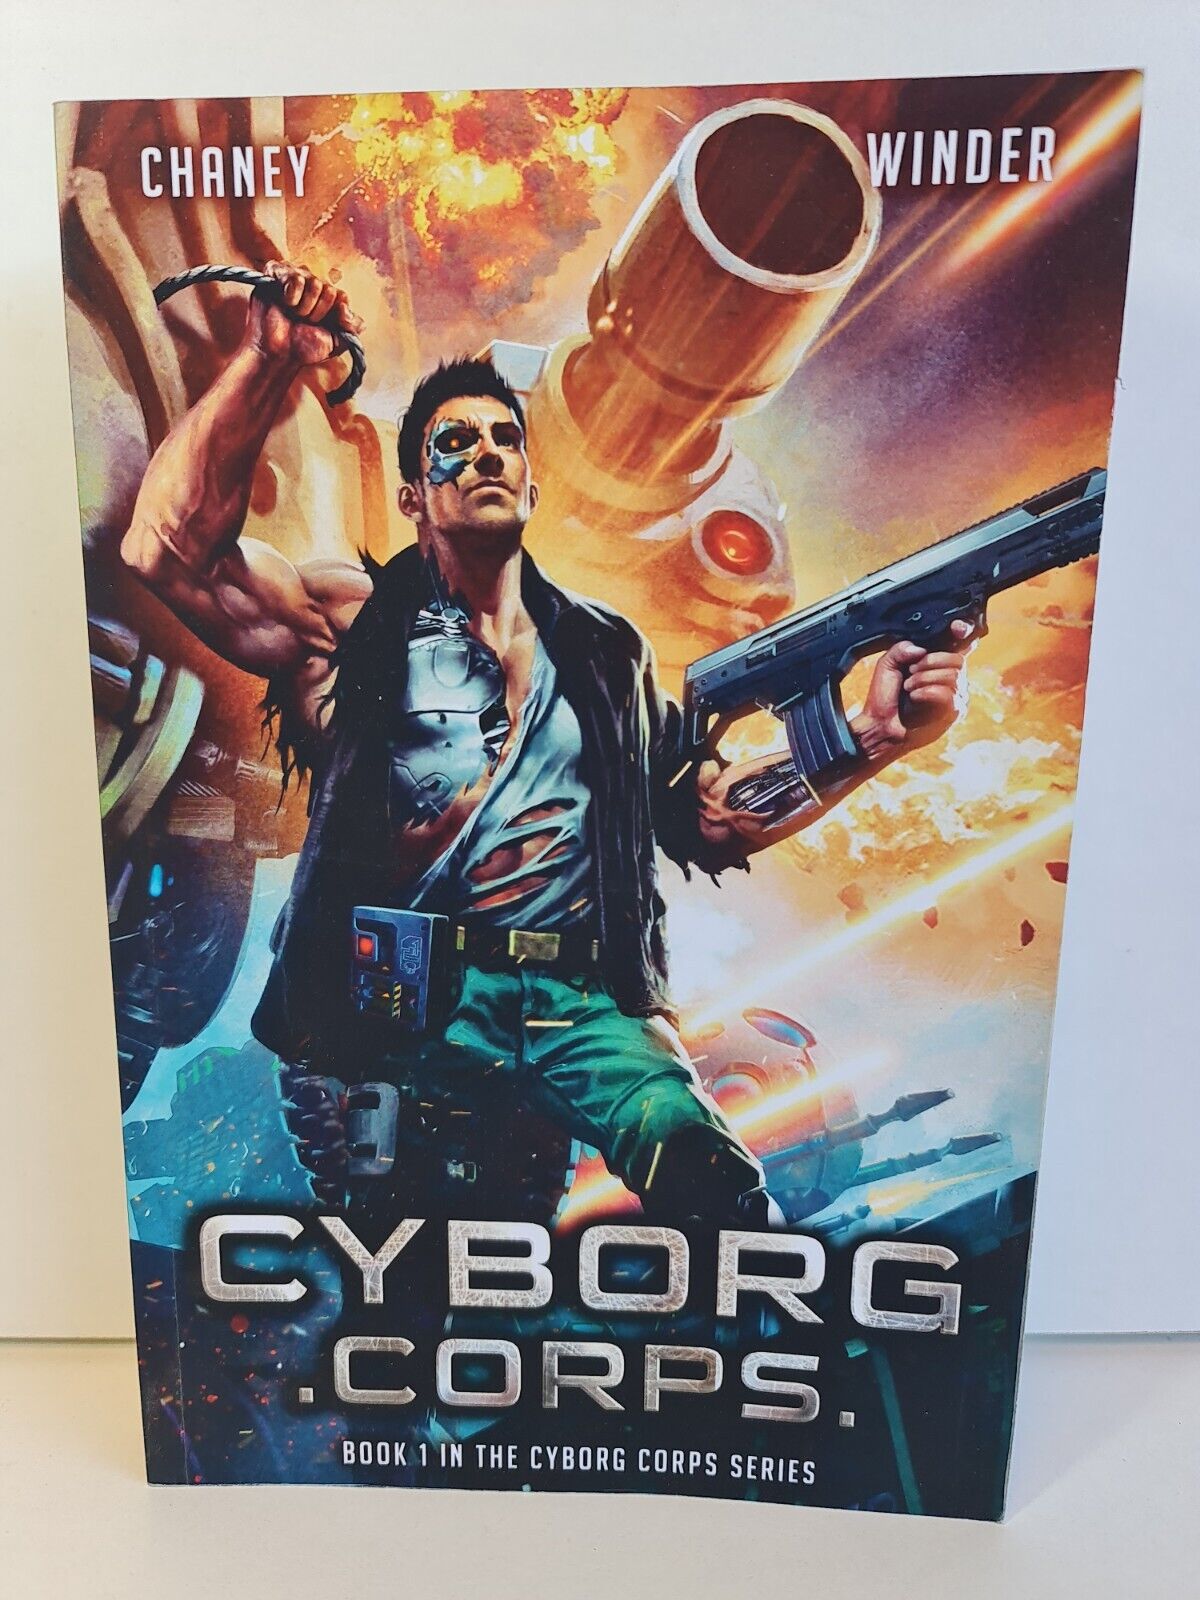 Cyborg Corps by J N Chaney (2020)